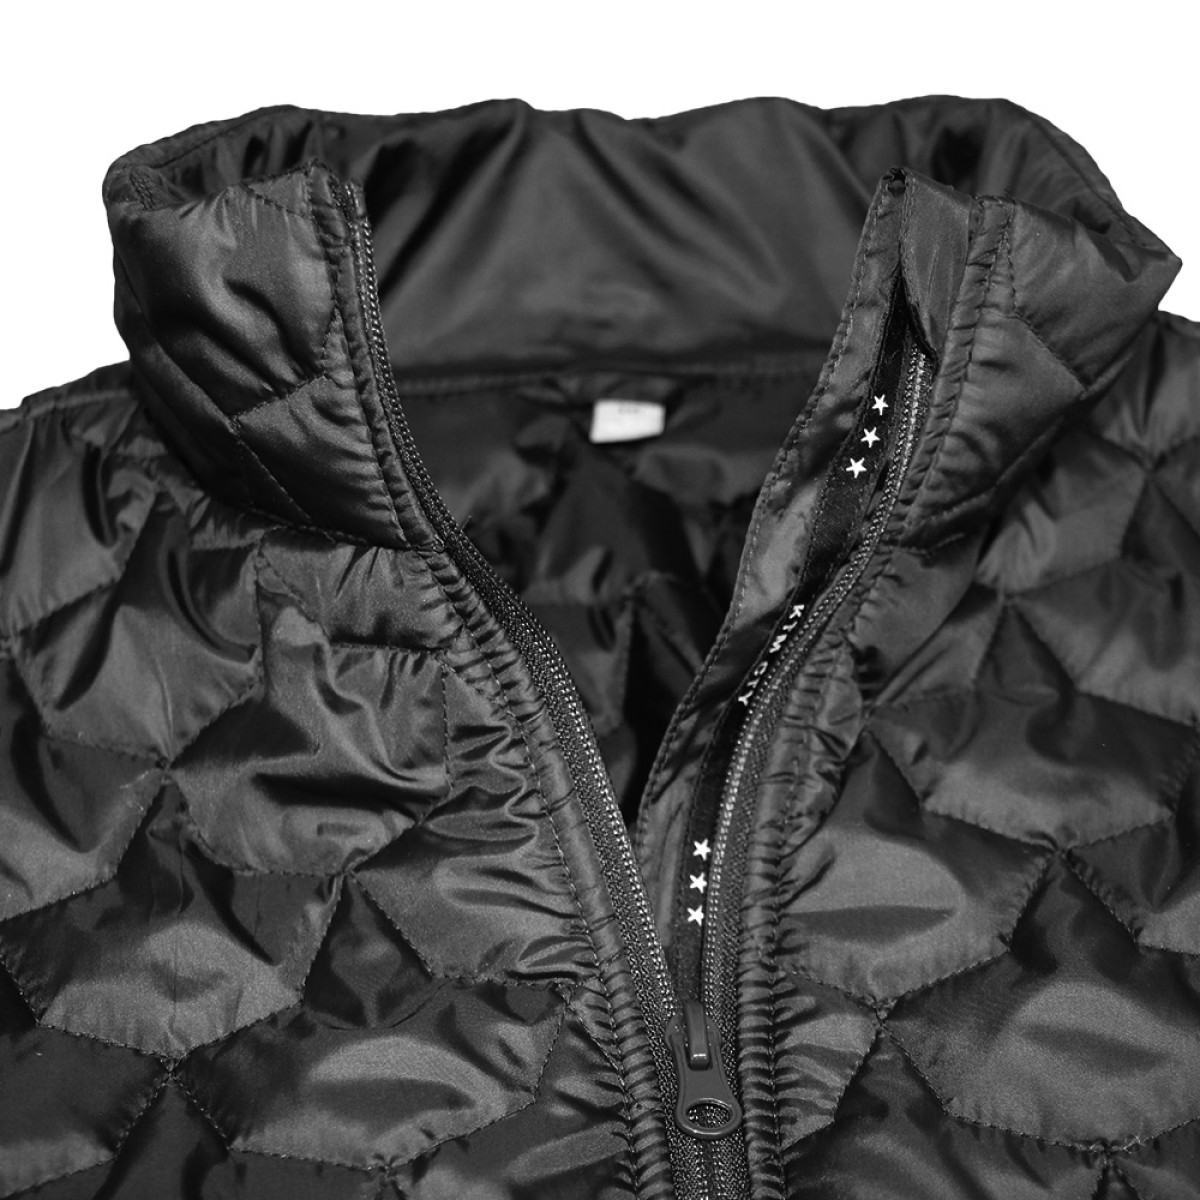 men-polyfiber-jacket-without-hoodiekpj05911-8a